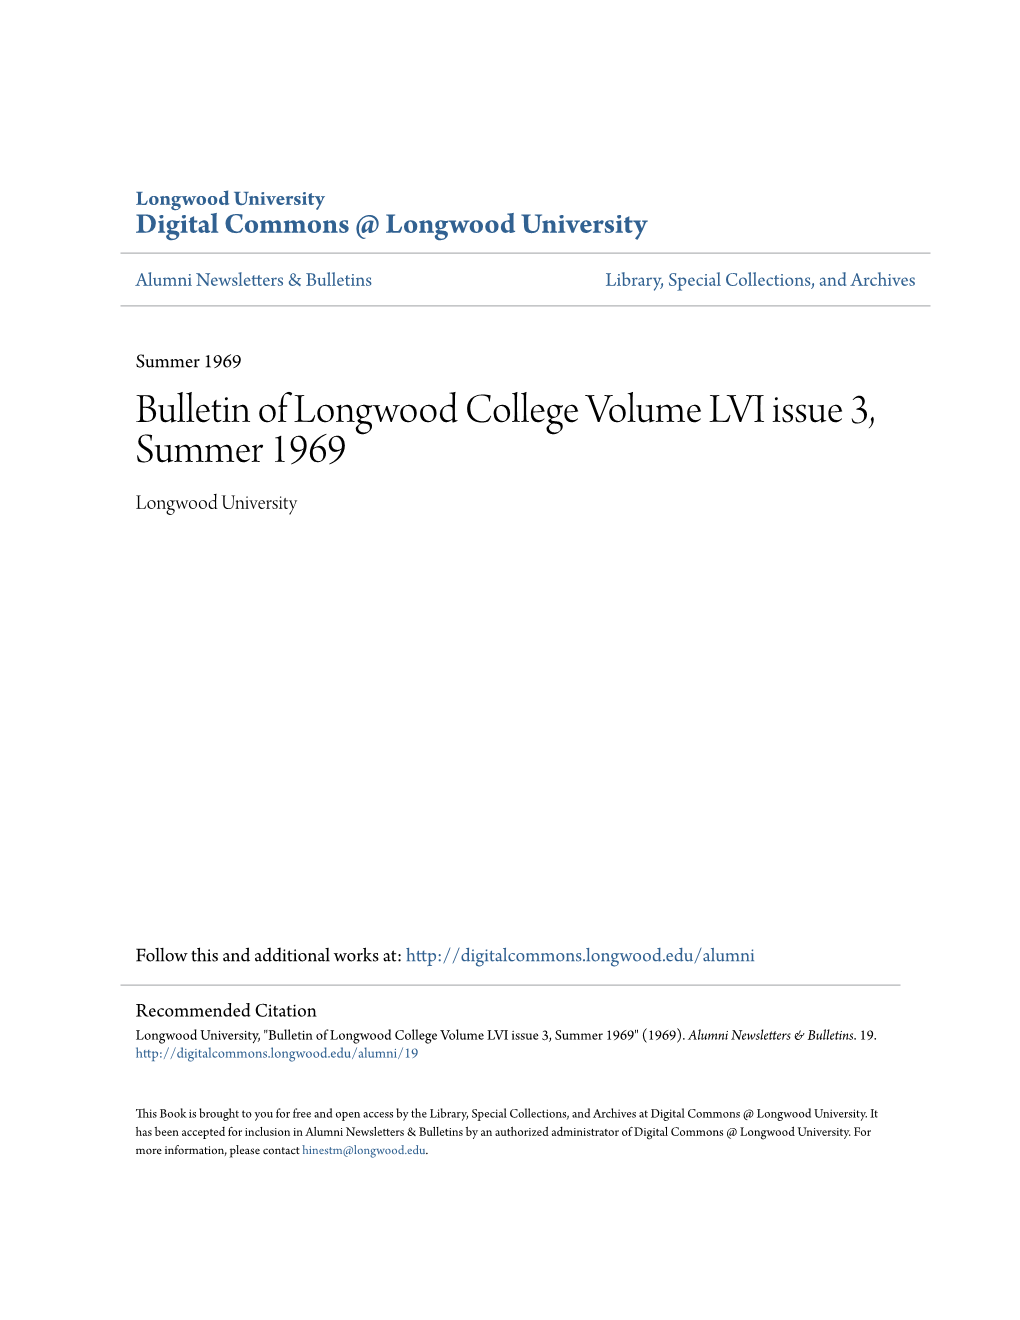 Bulletin of Longwood College Volume LVI Issue 3, Summer 1969 Longwood University